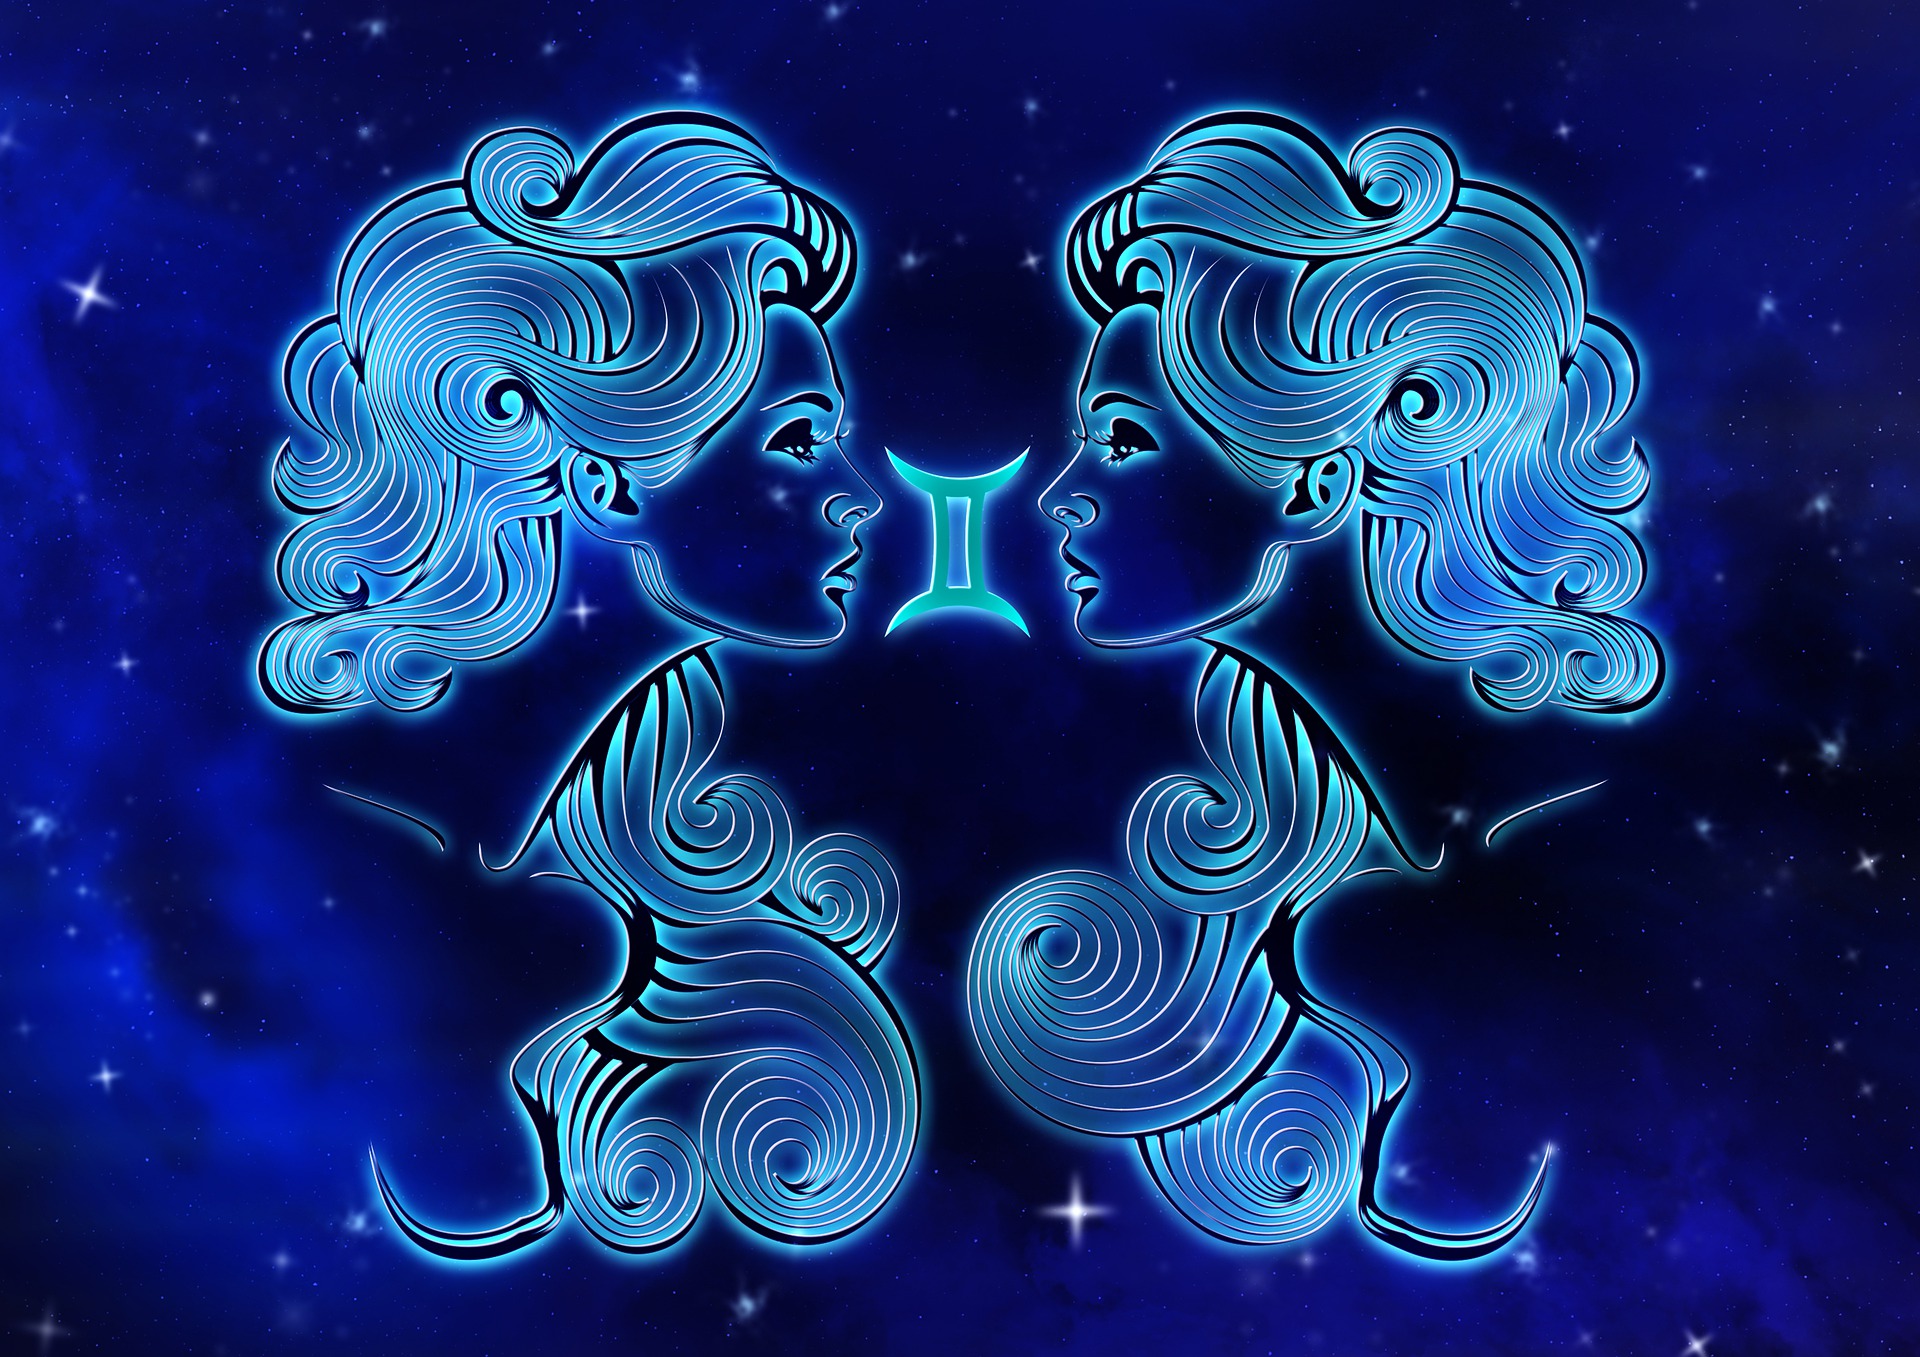 Blue Gemini Twins by DarkWorkX